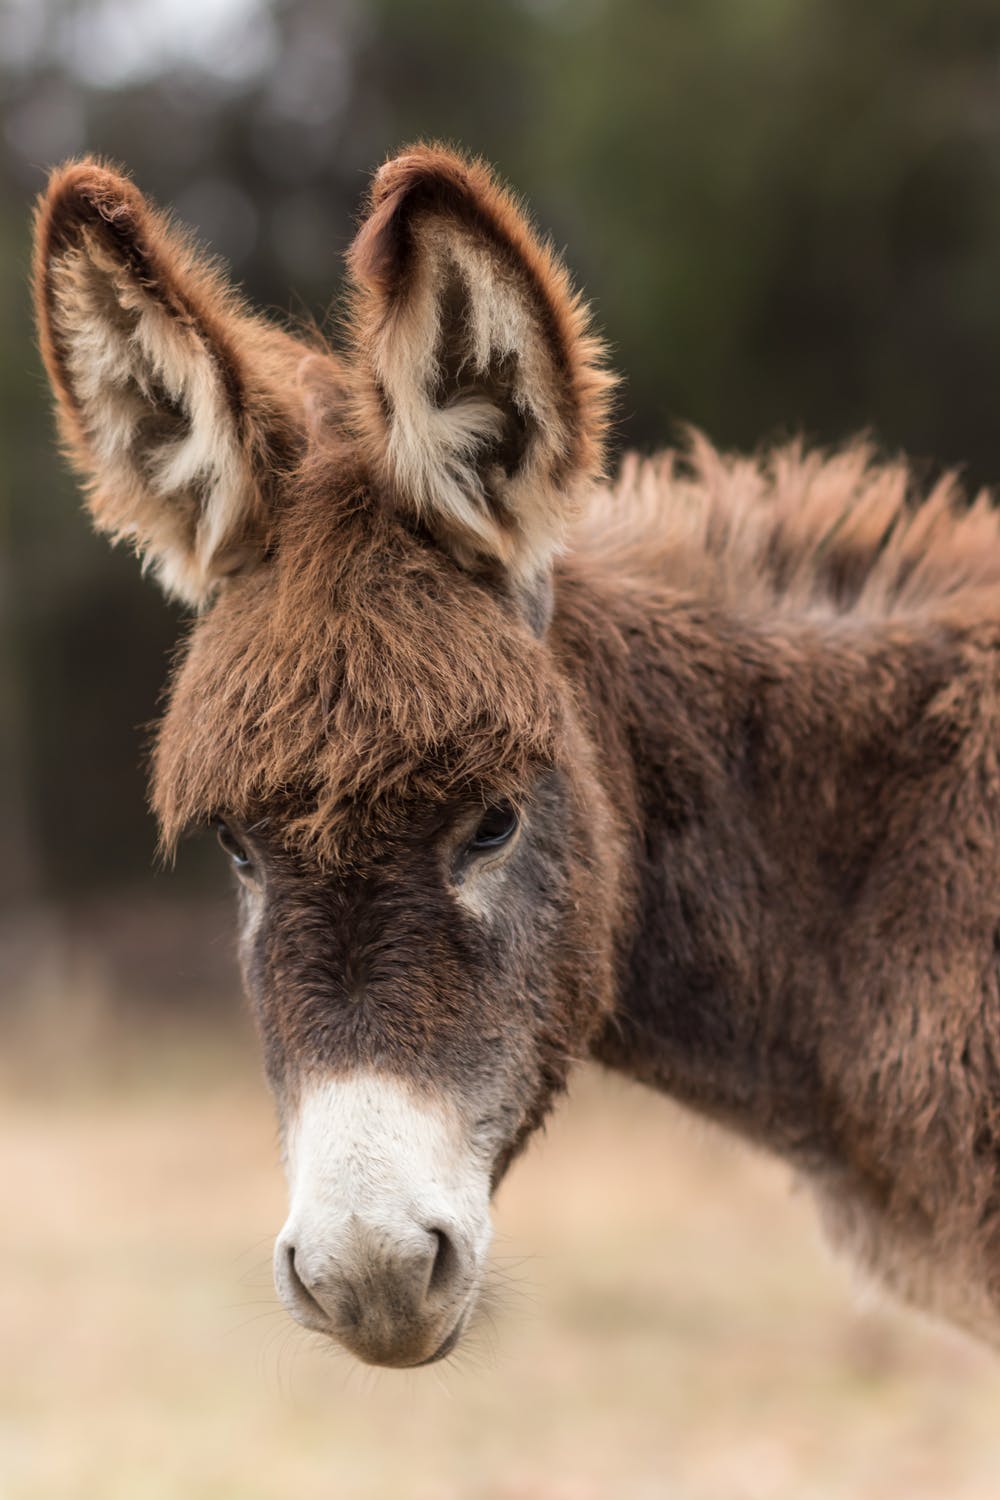 Donkeys: The Vegan Alternative Pet